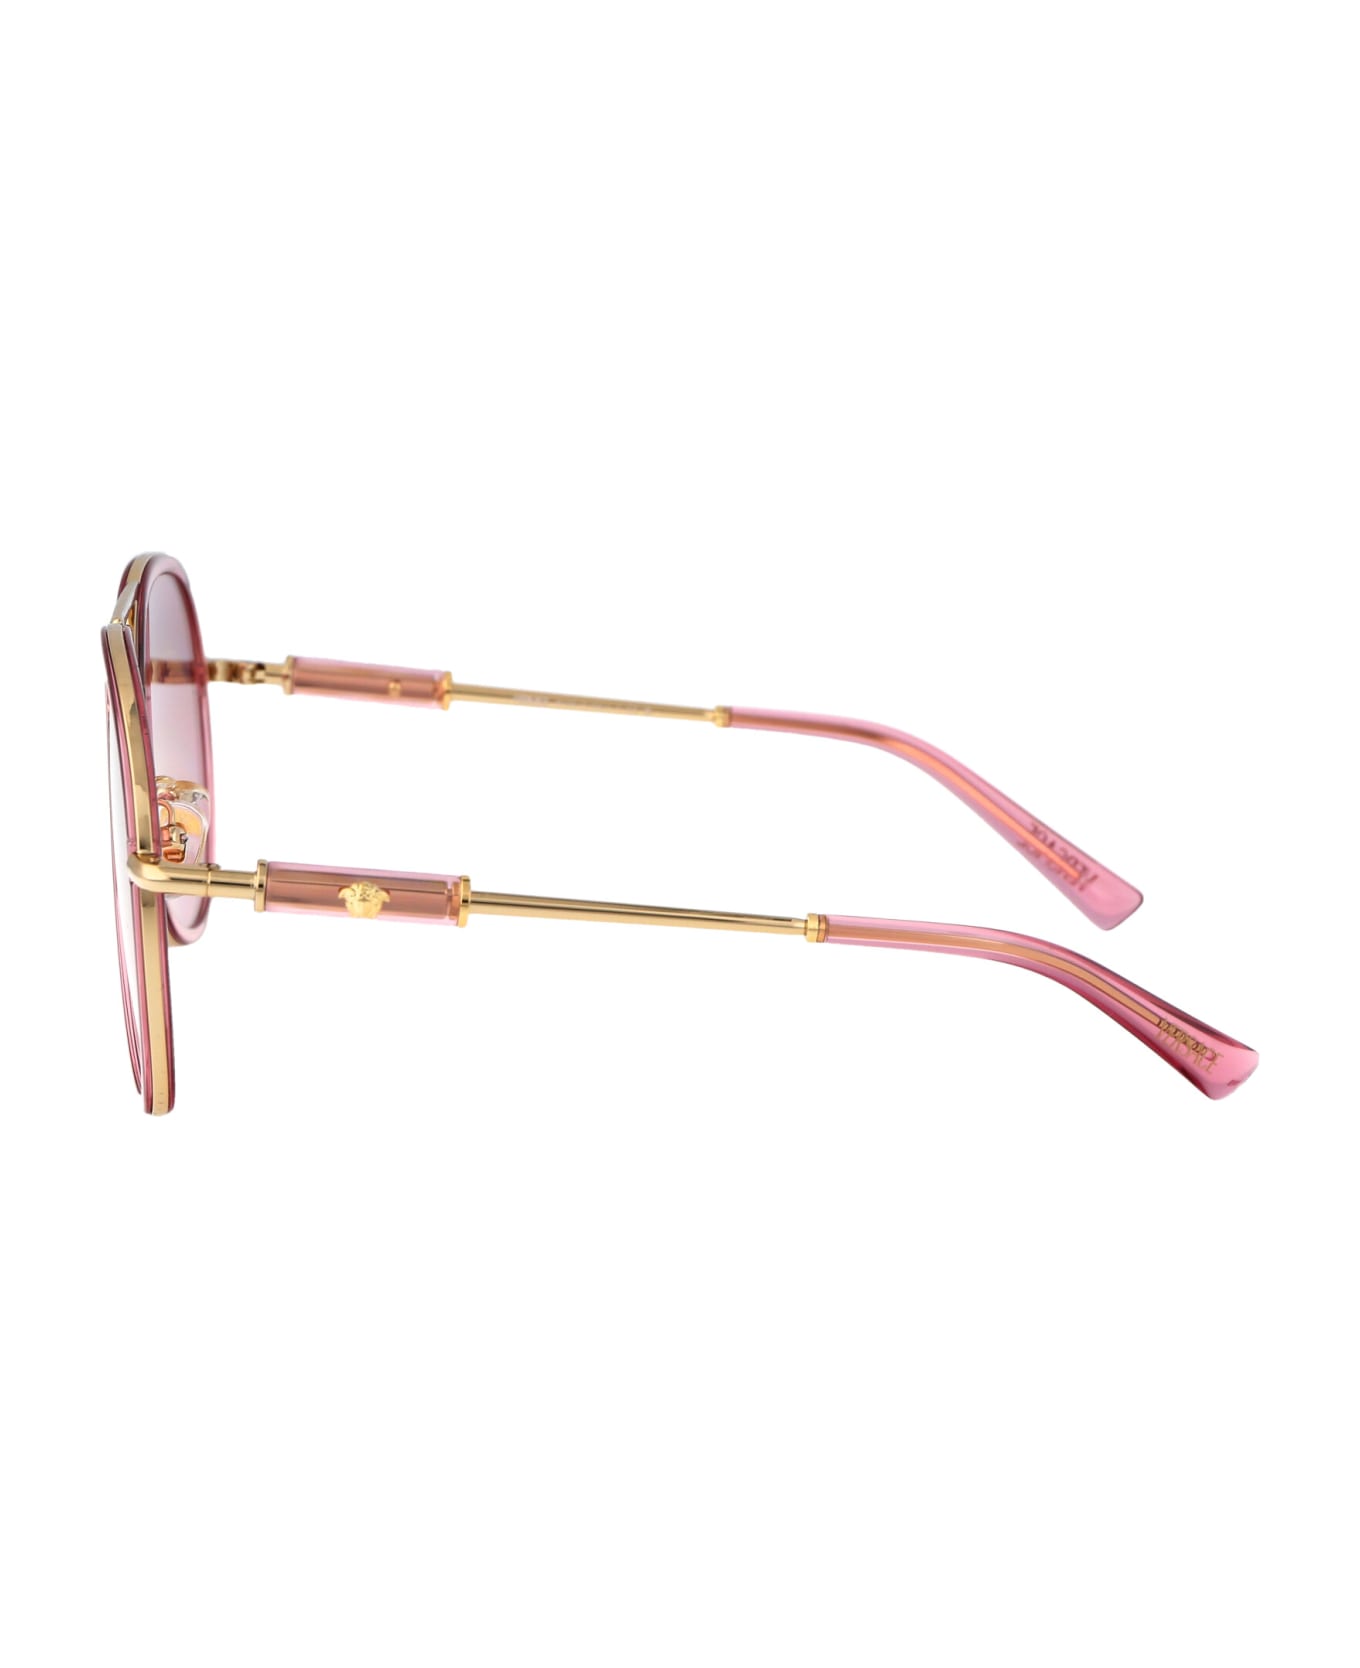 Versace Eyewear 0ve2260 Sunglasses - 100284 Pink Transparent